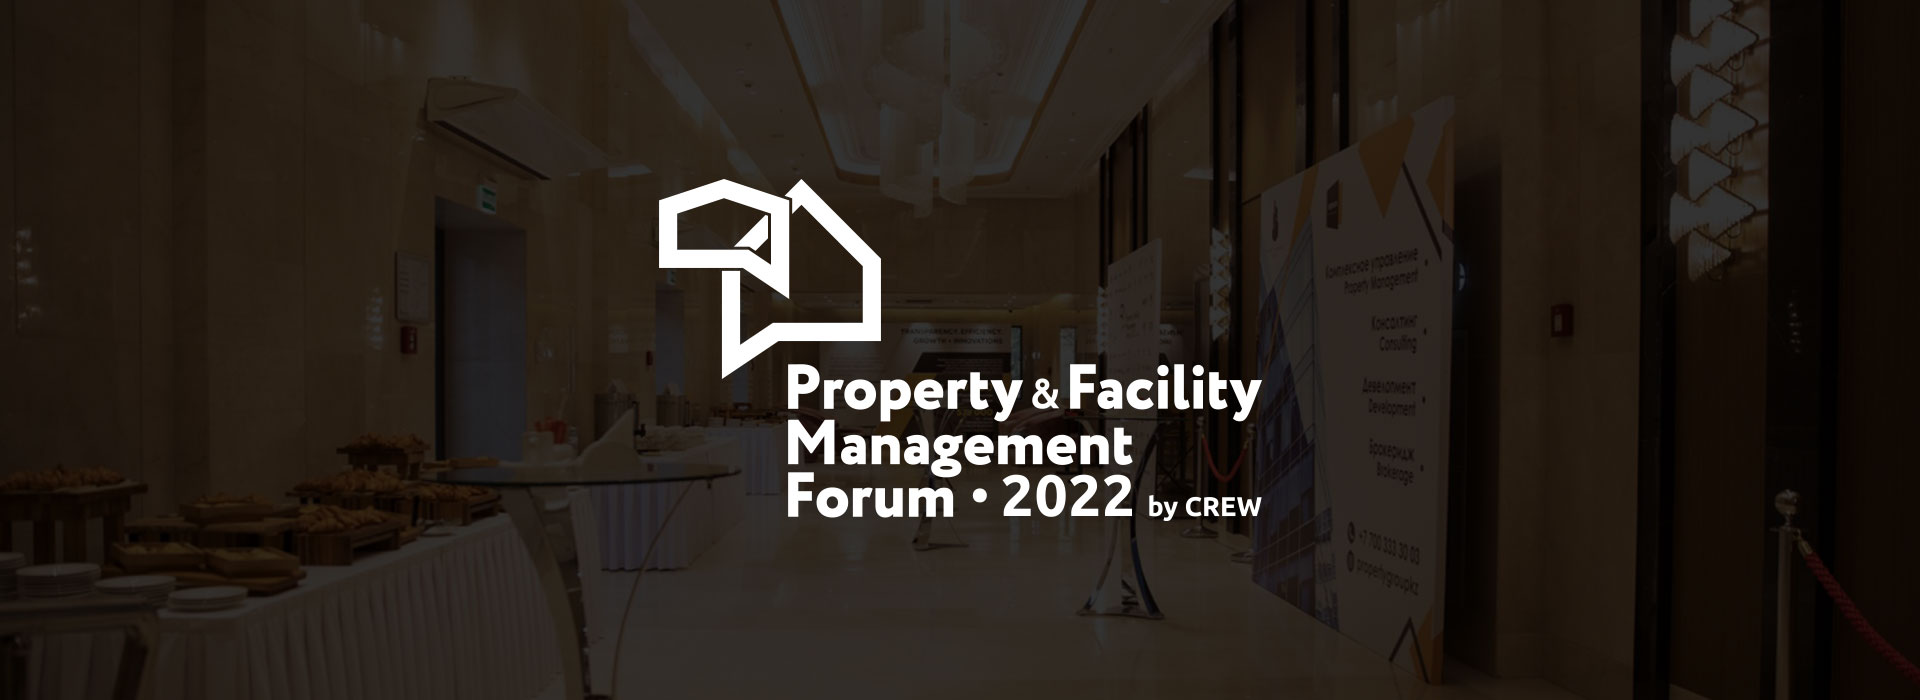 Logo of Property & Facility Management Forum